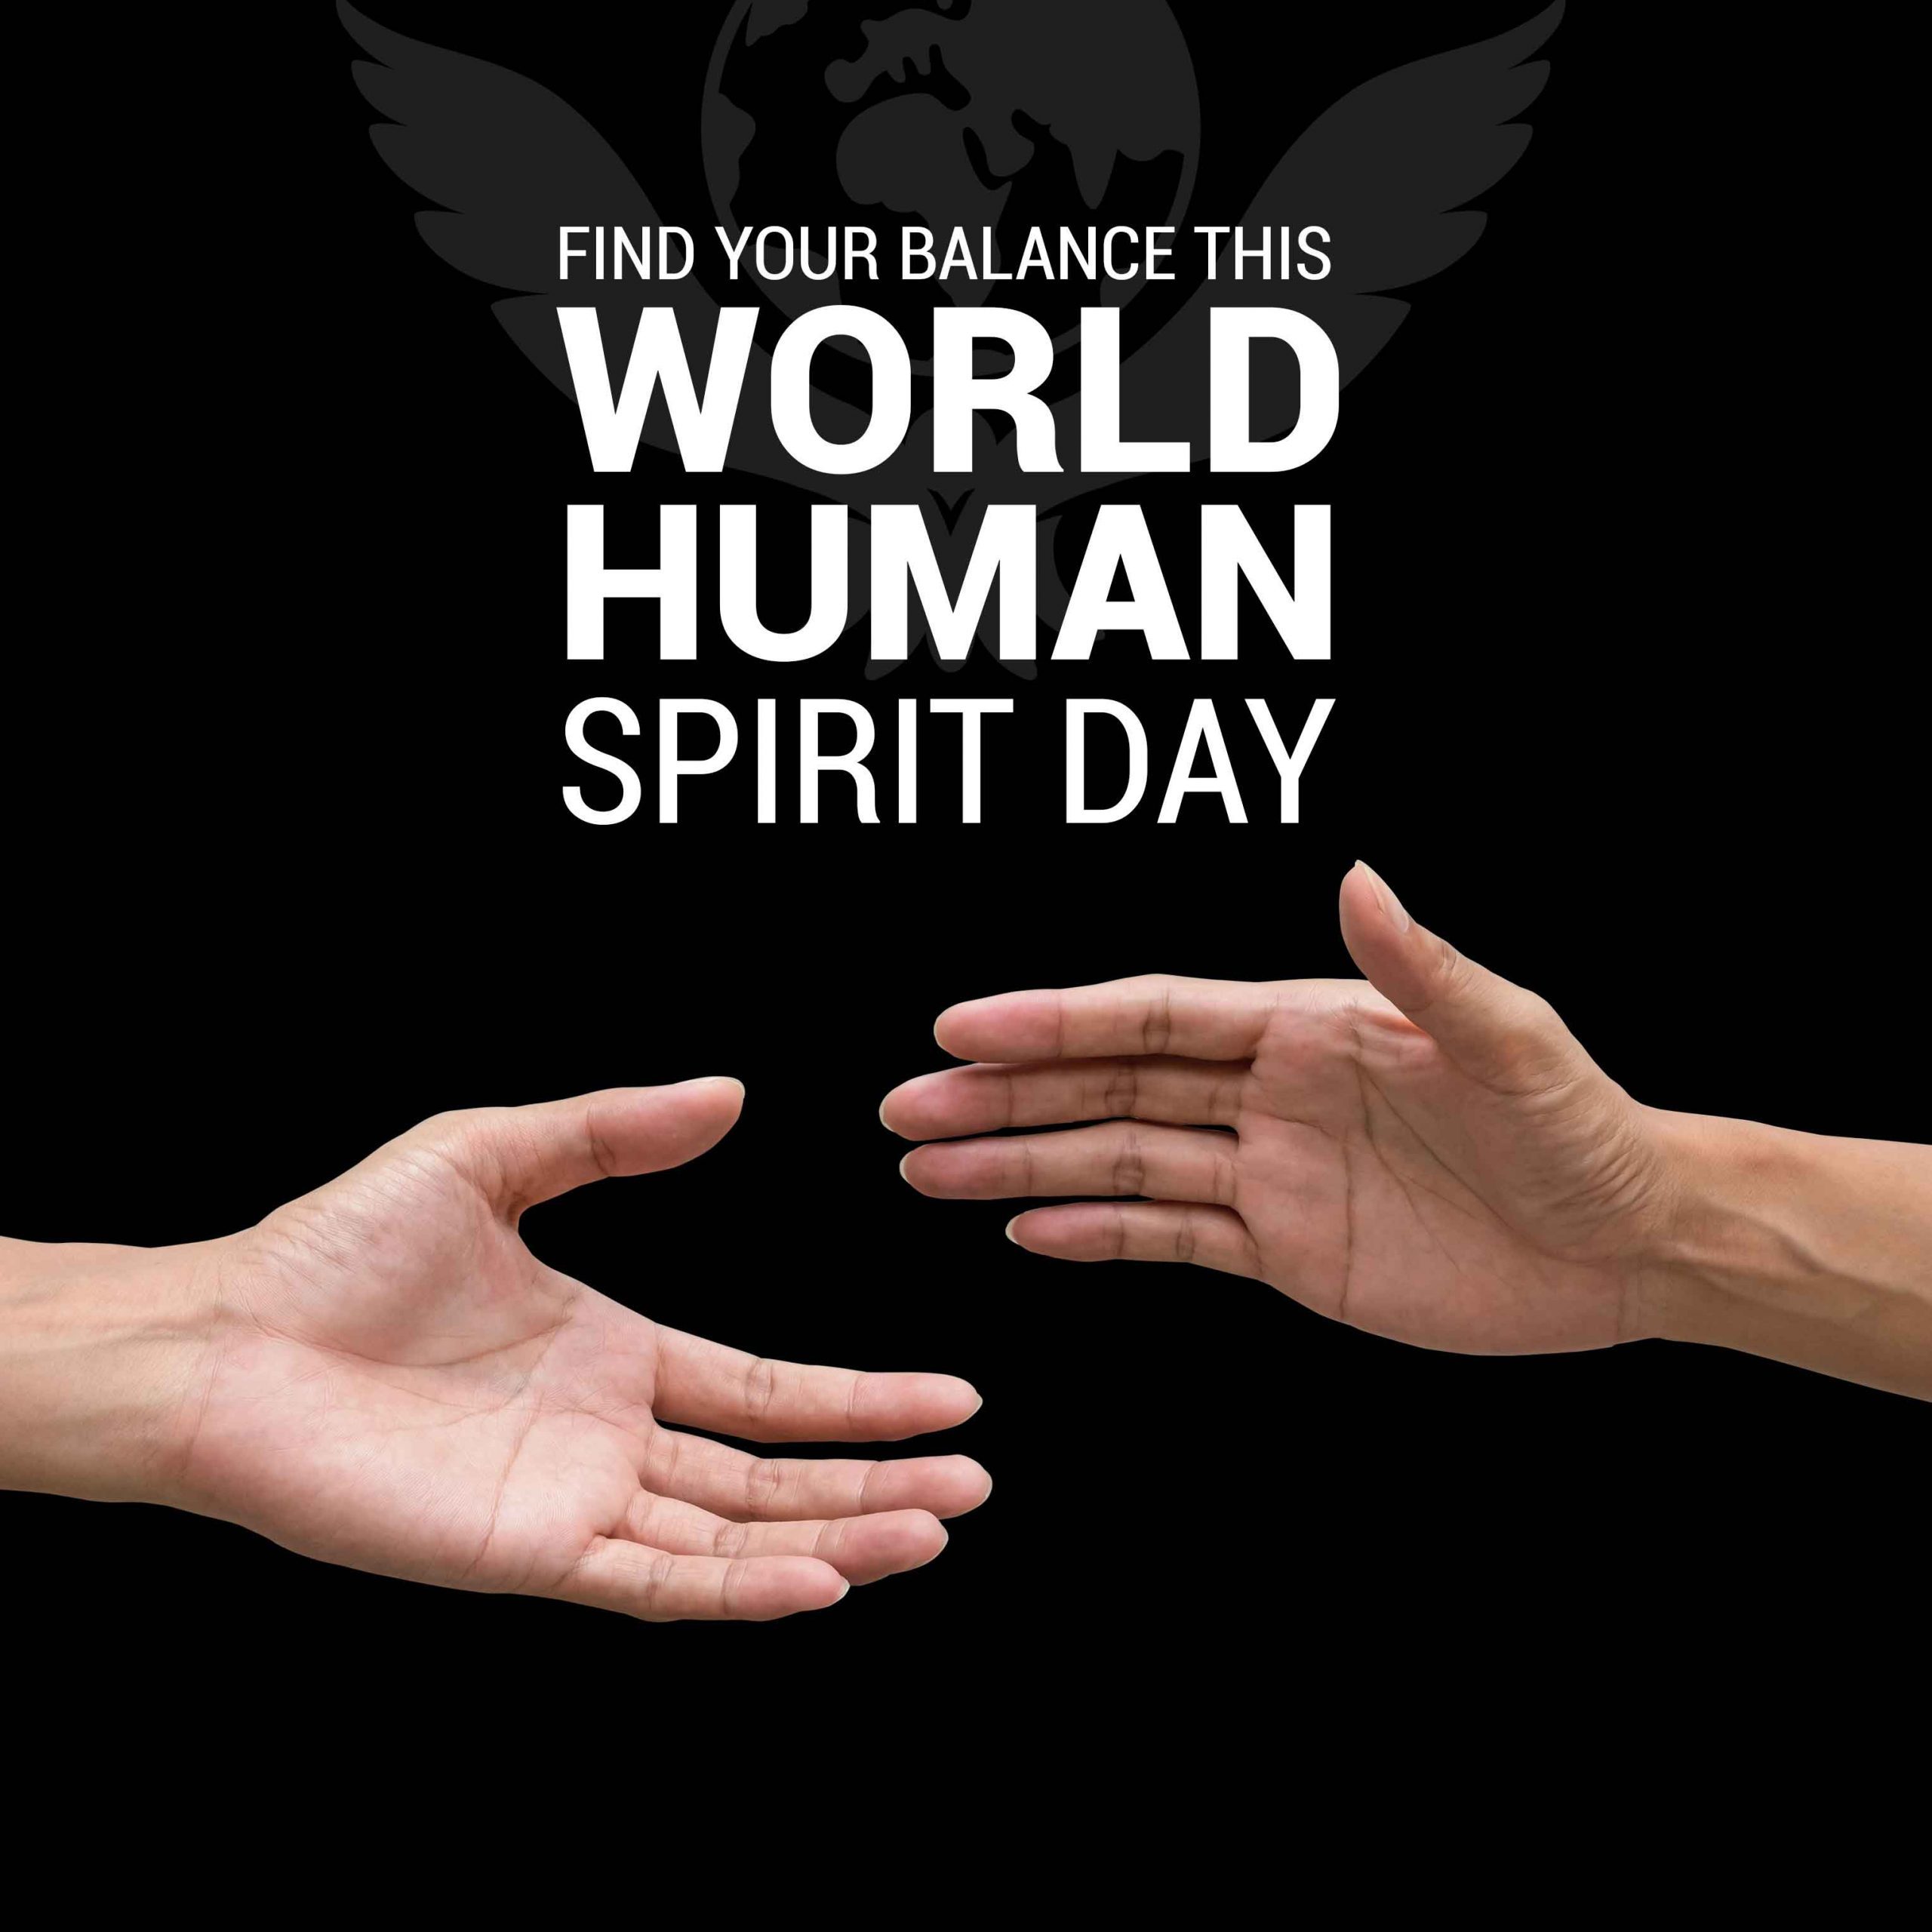 Find Your Balance this World Human Spirit Day